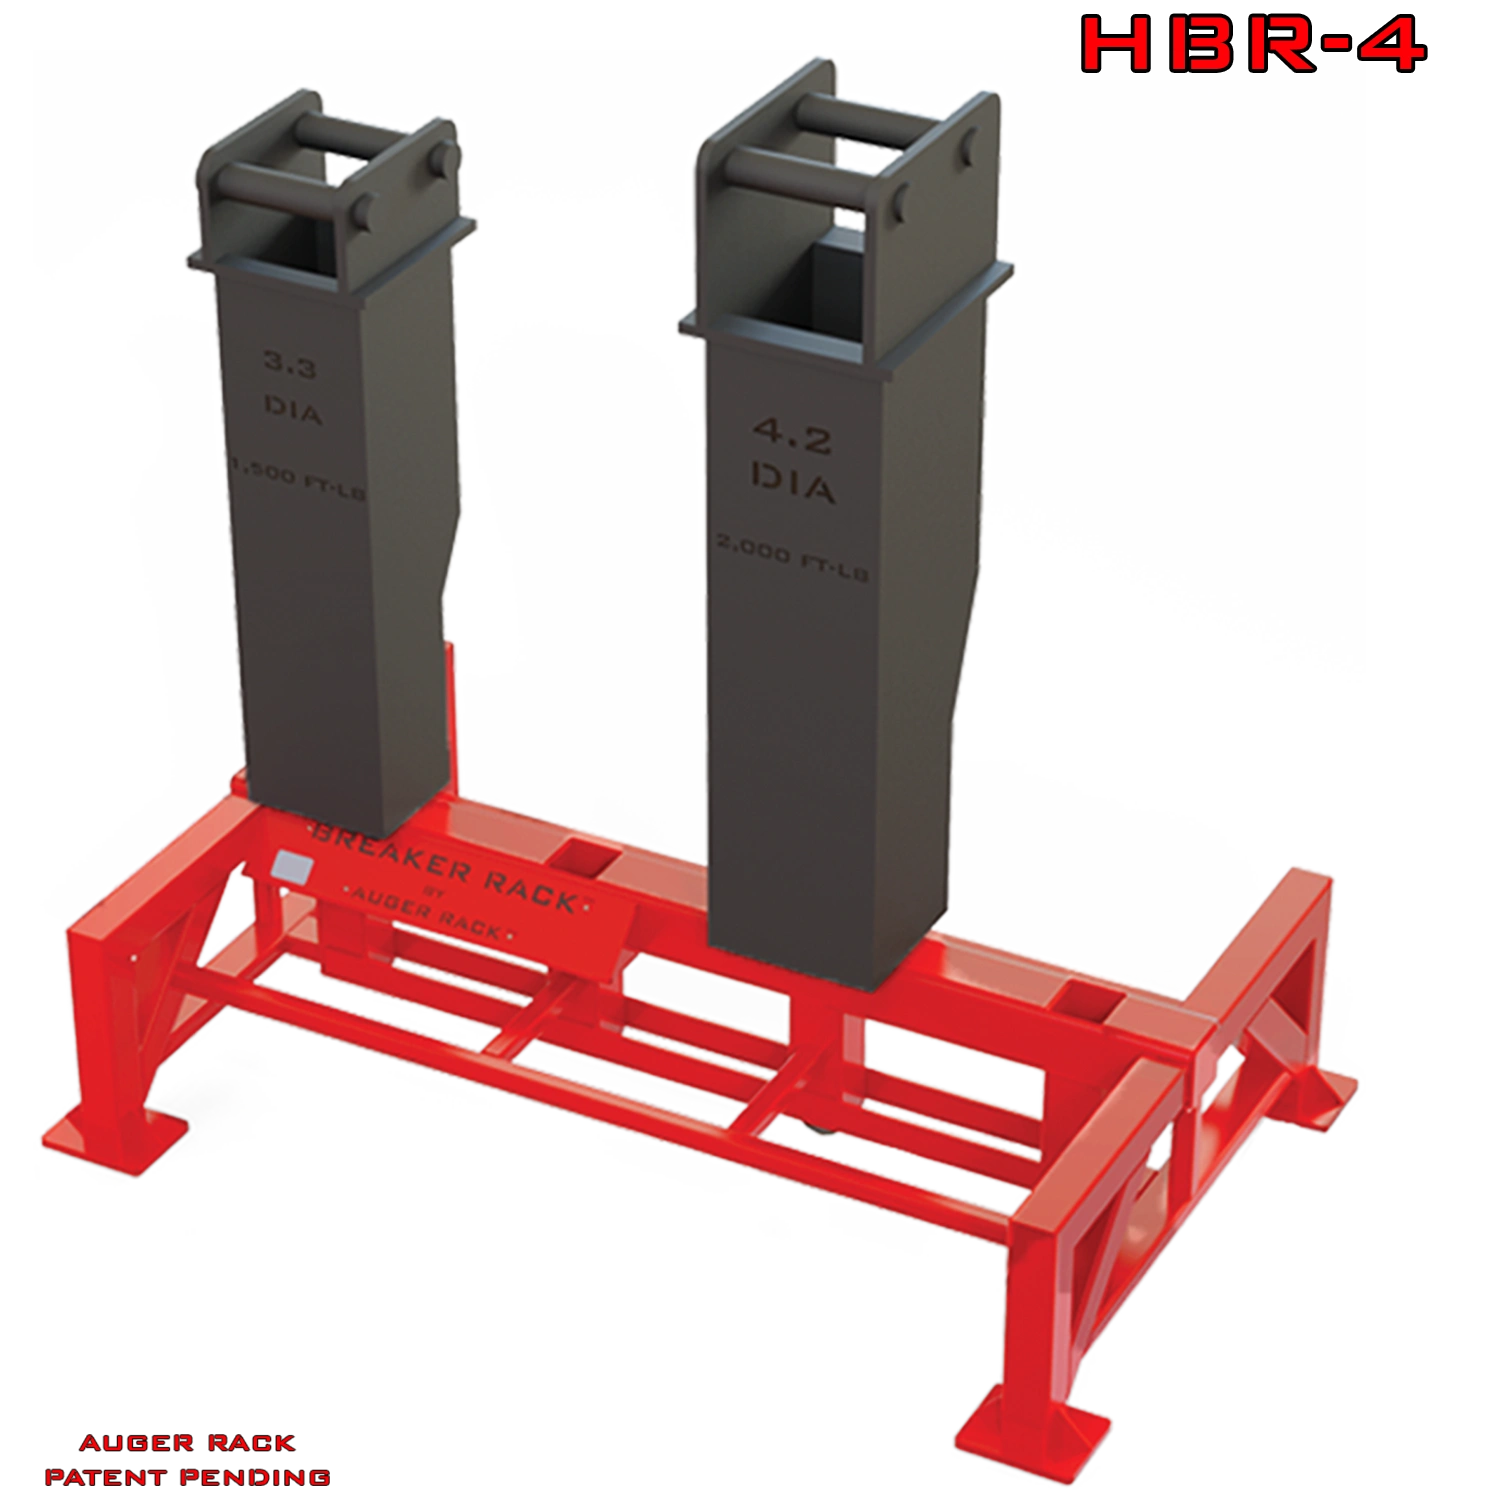 HBR-4 Hydraulic Breaker Storage Rack